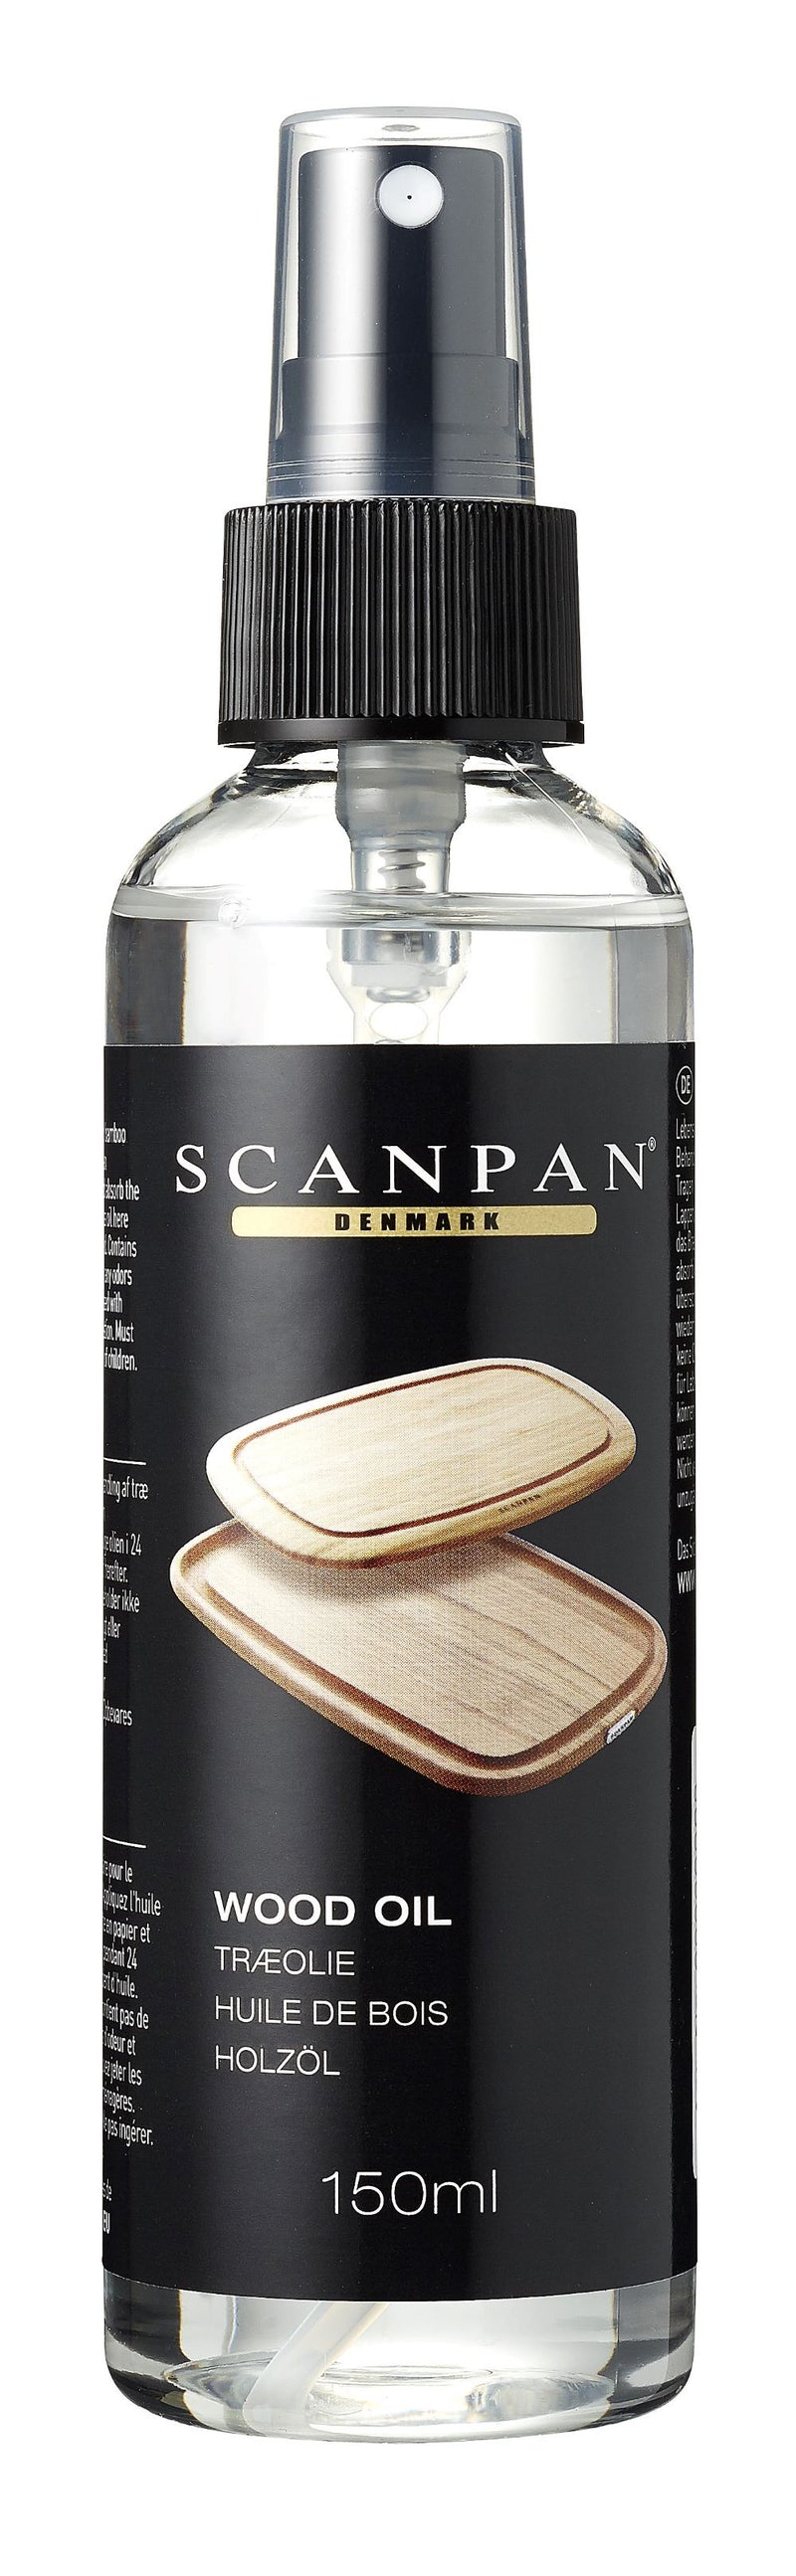 Scanpan wood Oil 150ml 17006 RRP $12.95